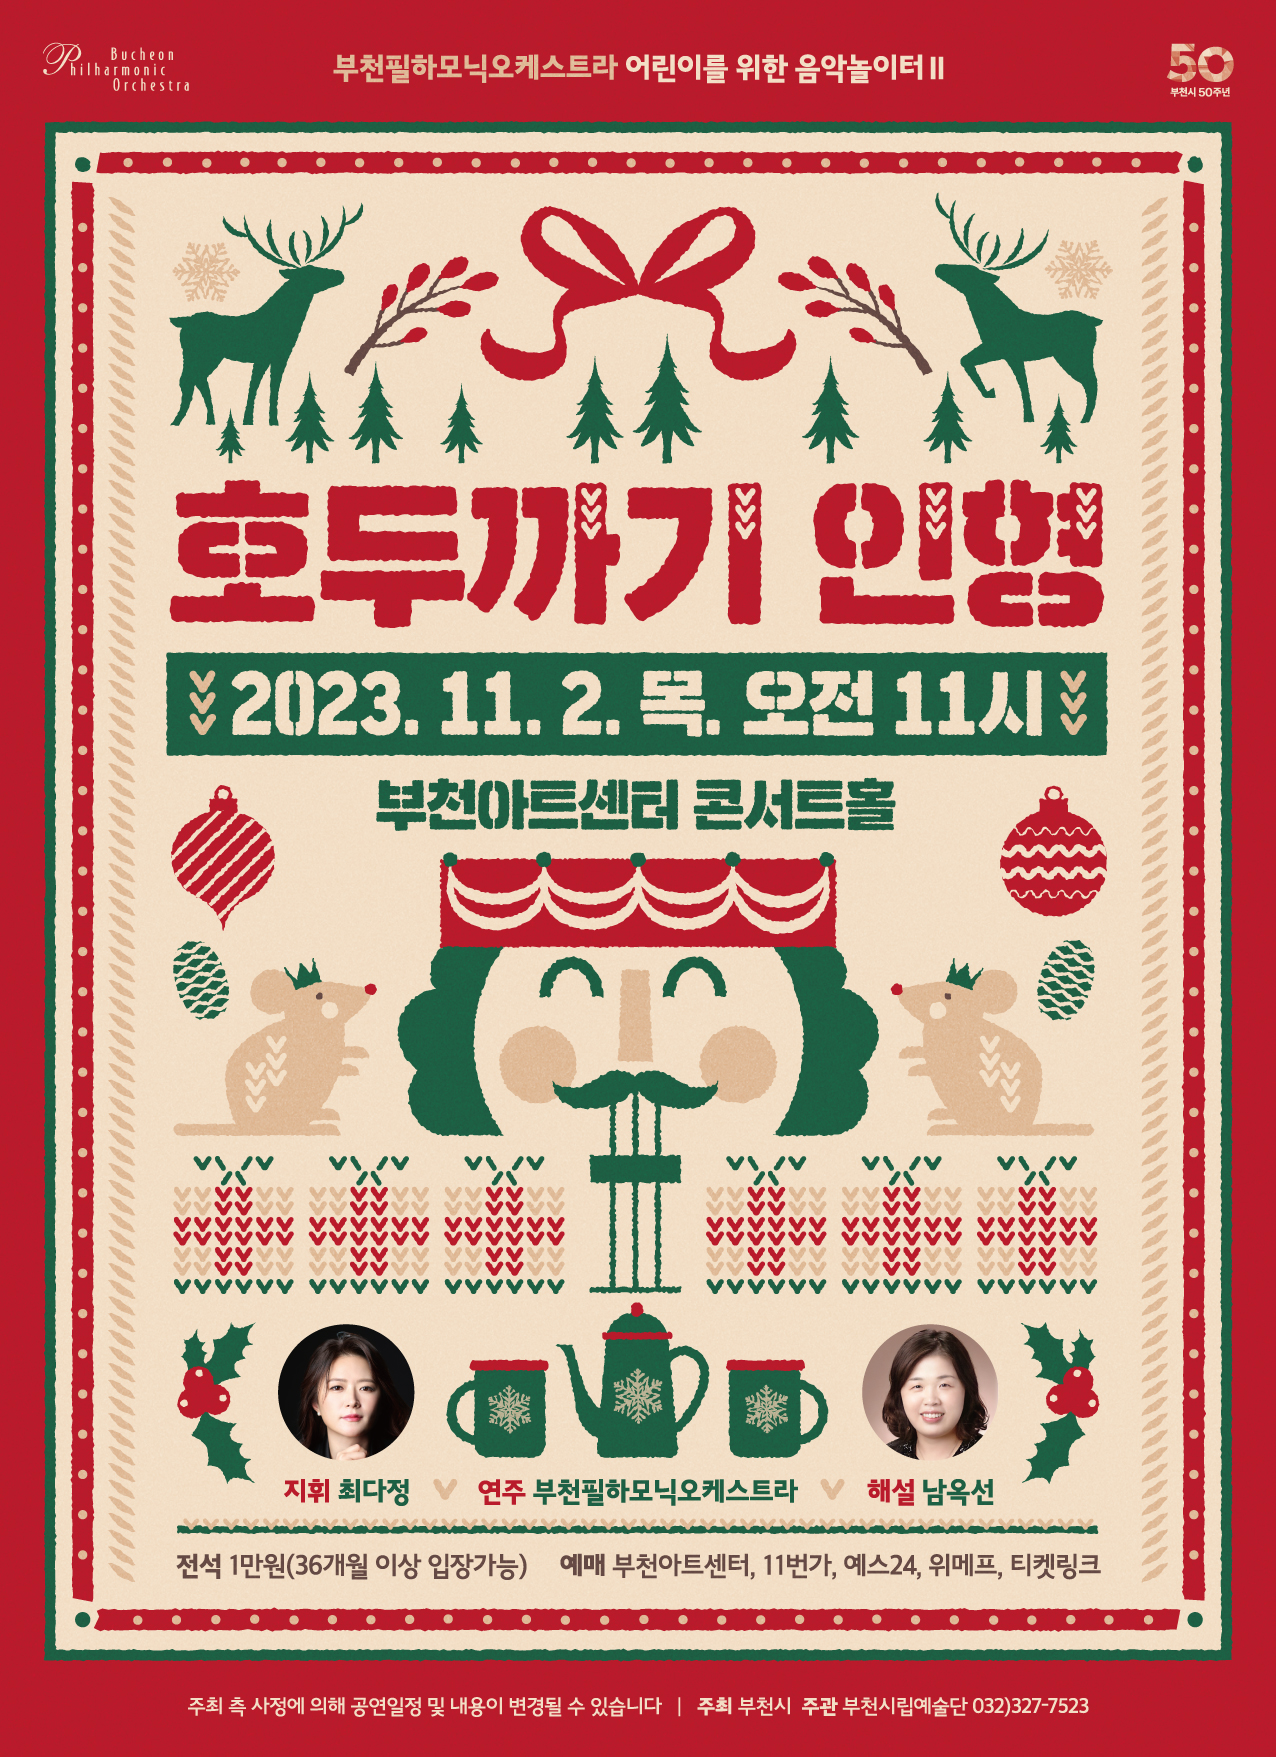 [11.2]Bucheon Philharmonic Orchestra Concert for kids II